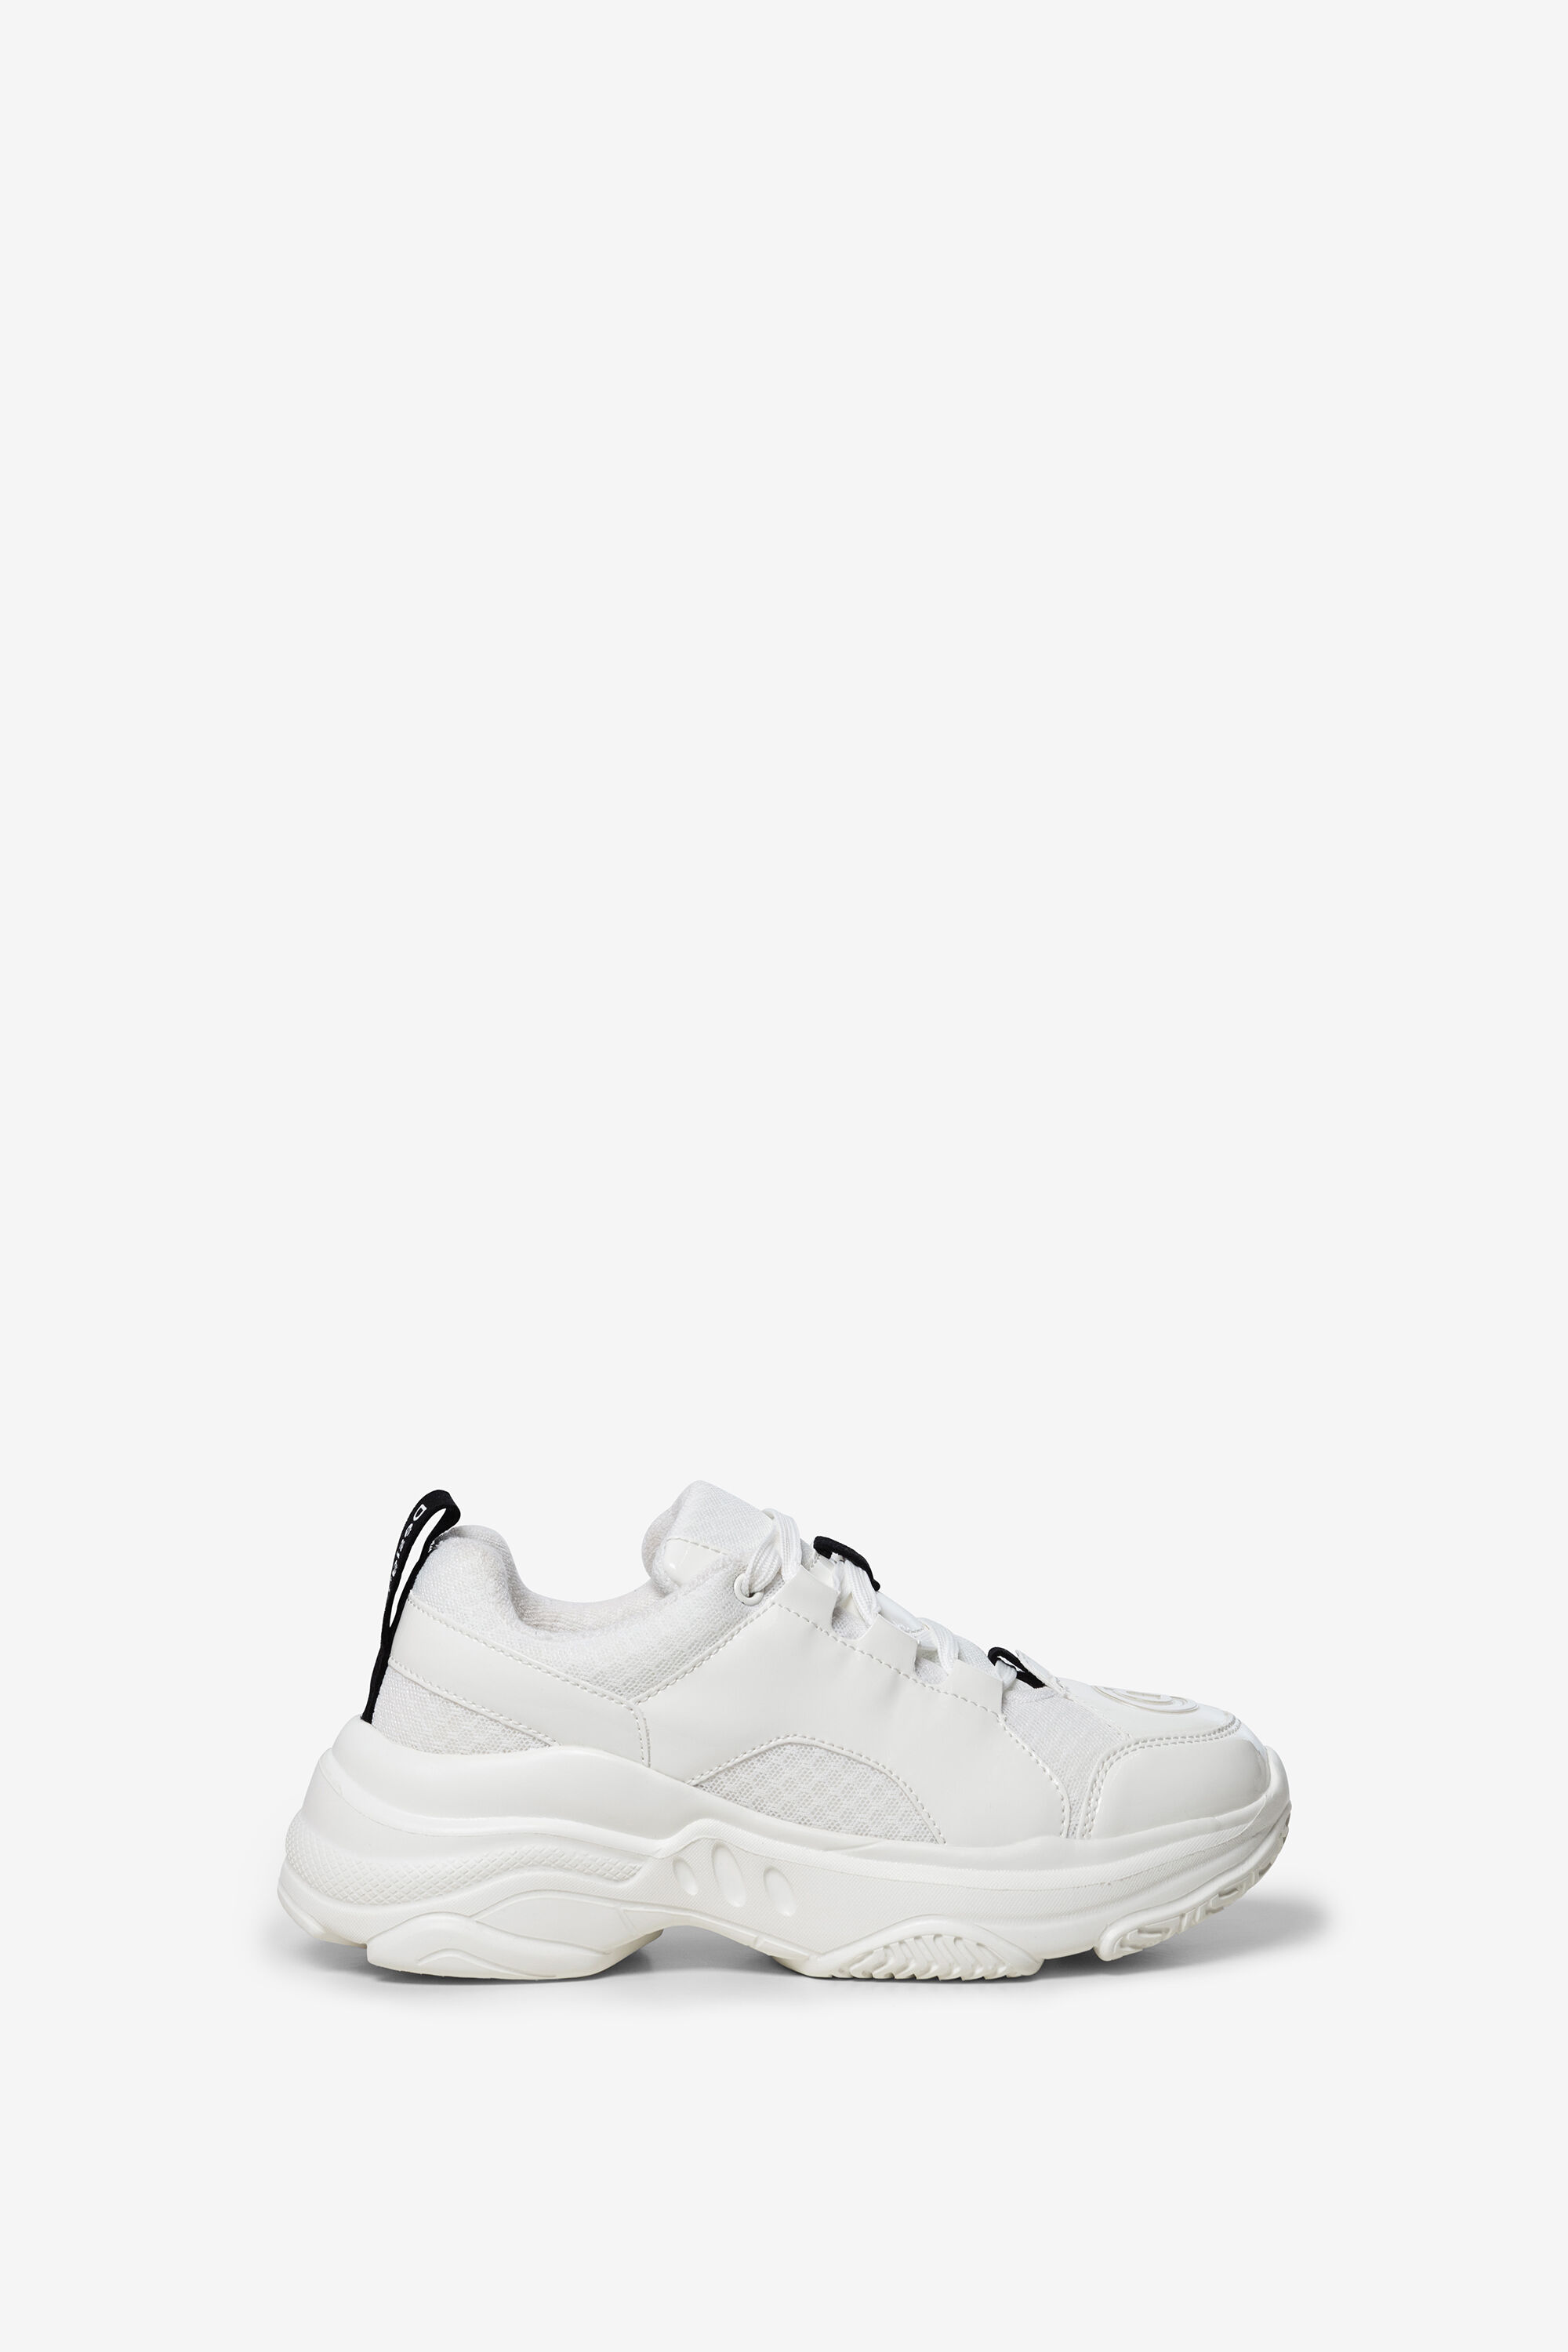 chunky white tennis shoes